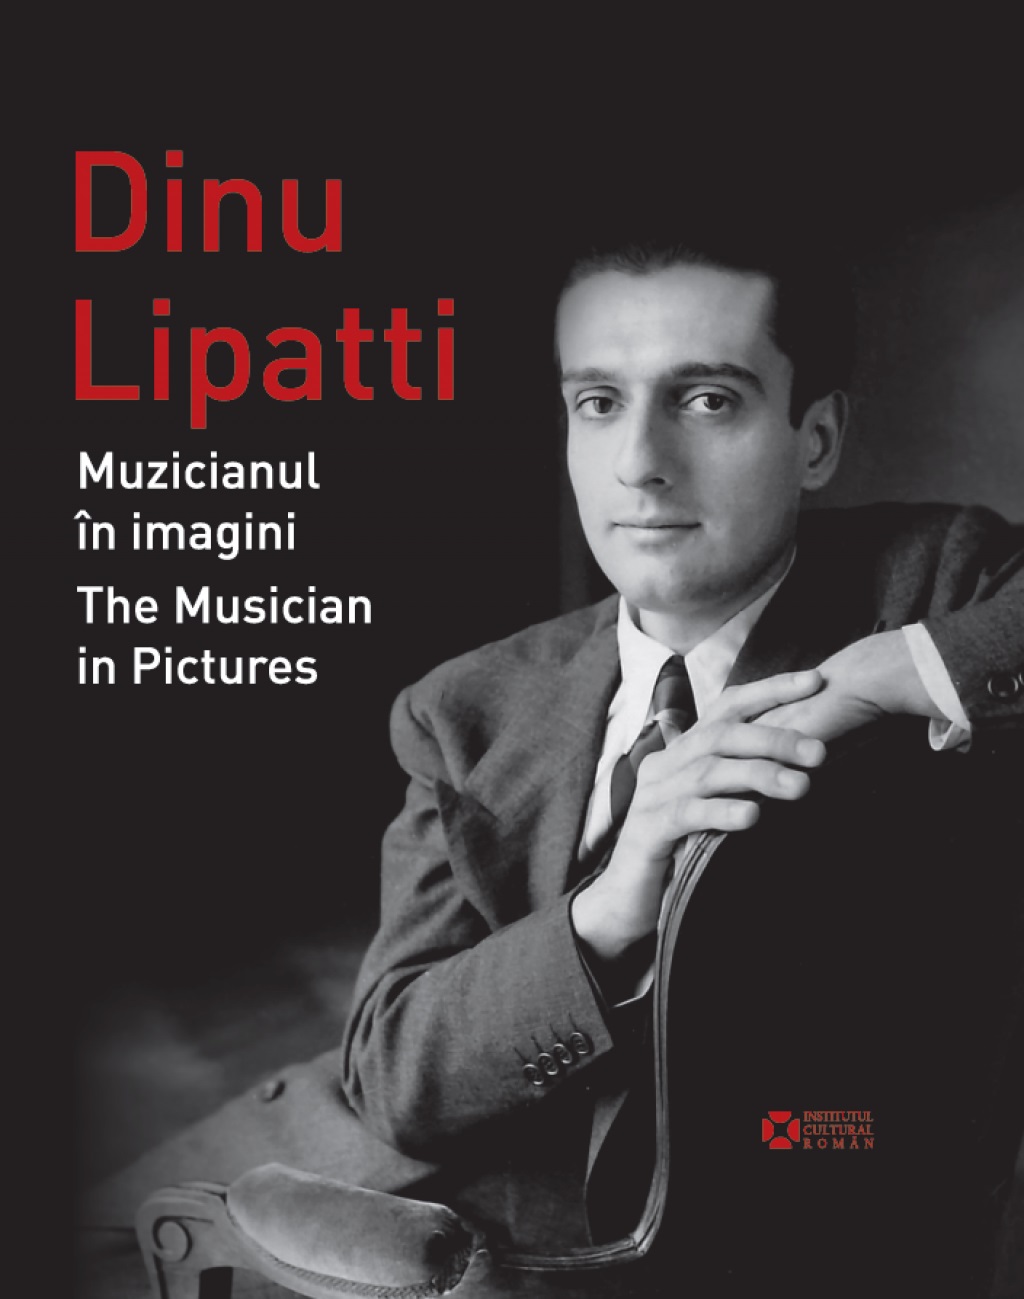 Dinu Lipatti: Muzicianul in imagini. The Musician in Pictures